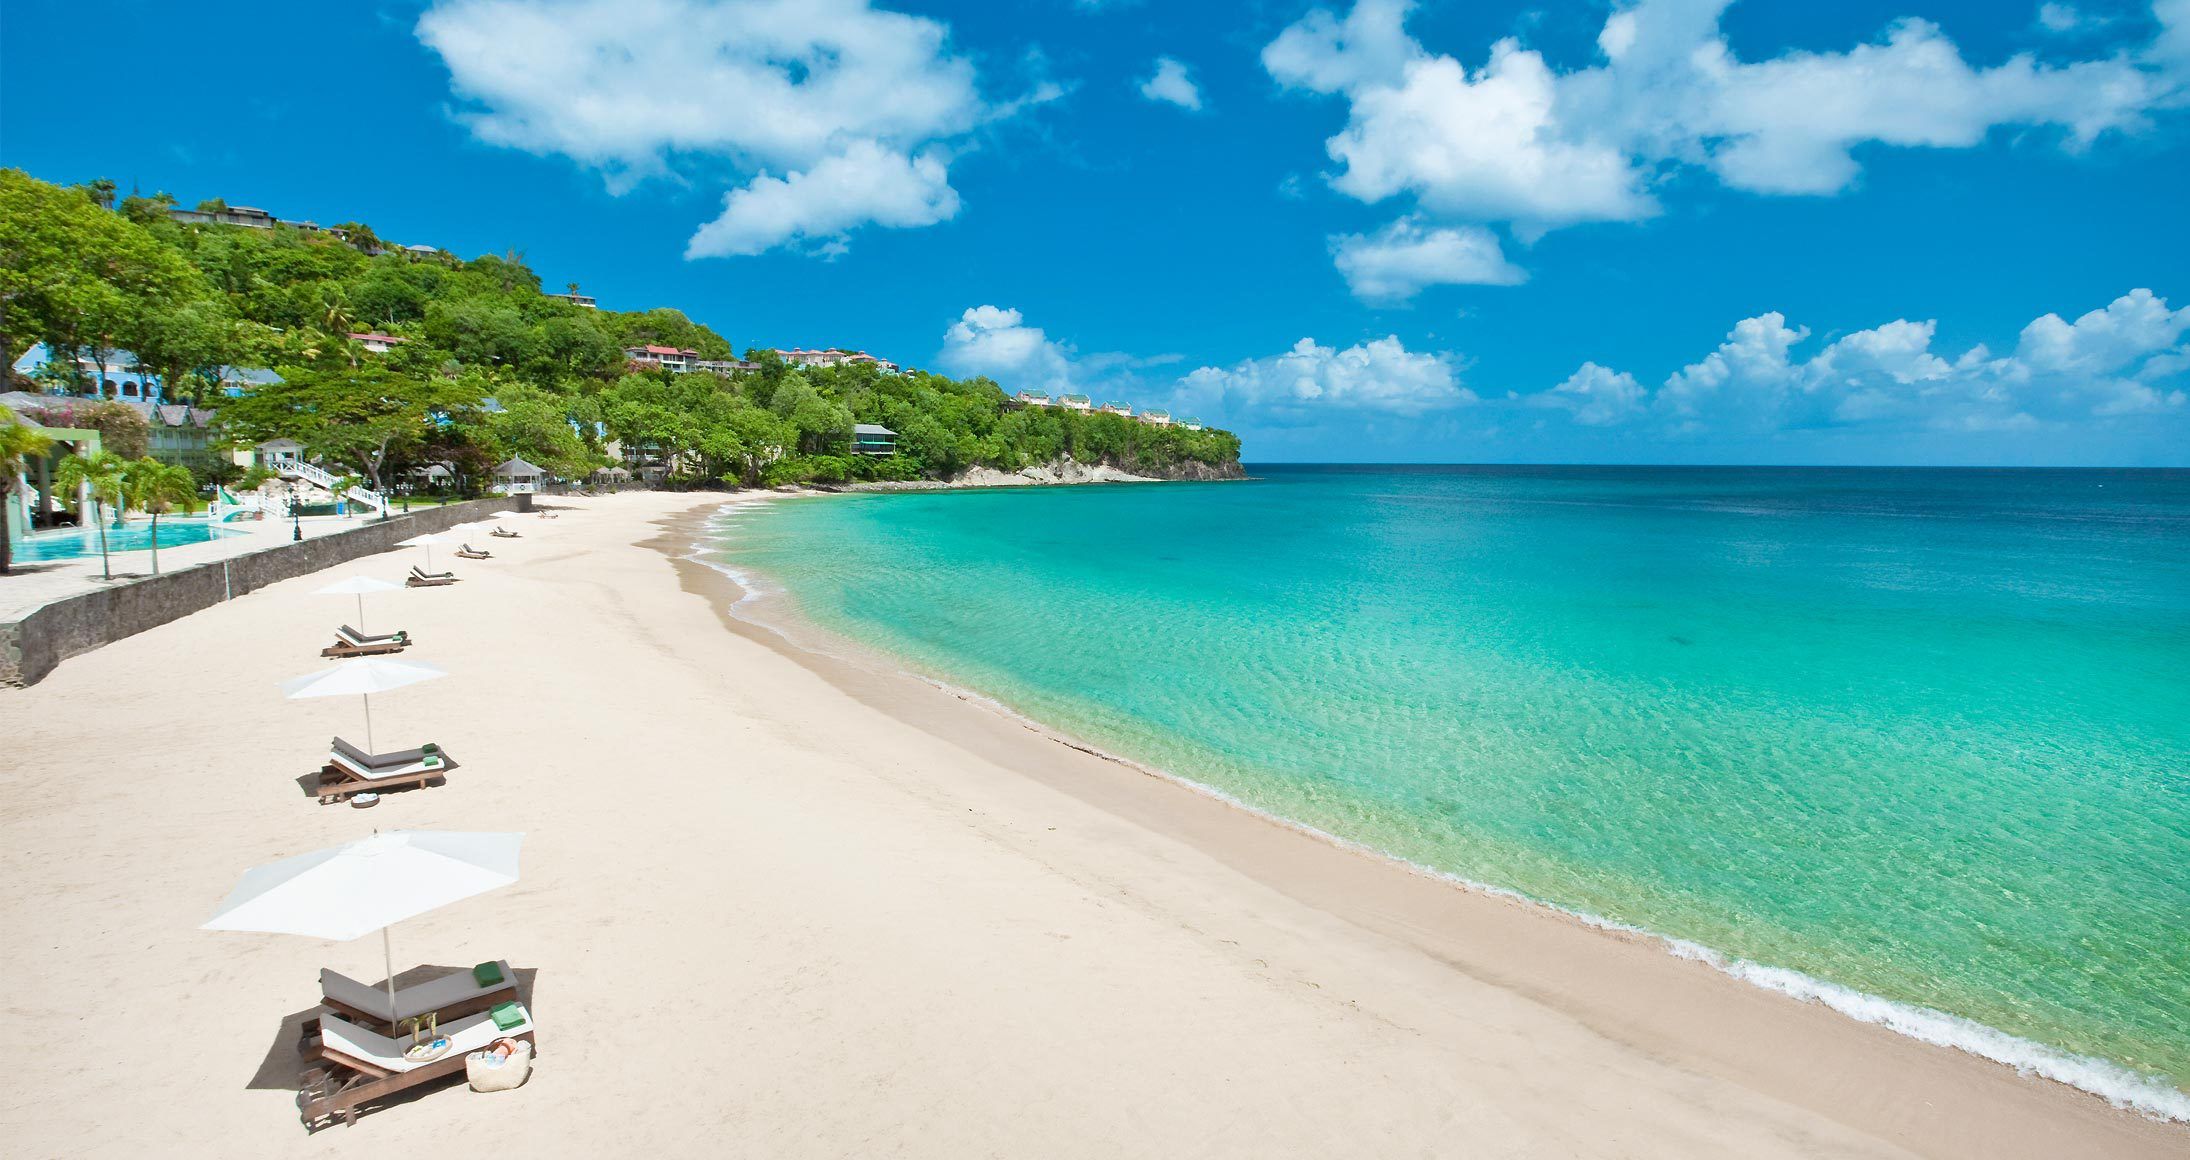 St Lucia Grande Sandals Resort Wallpapers K Hd St Lucia Grande Sandals Resort Backgrounds